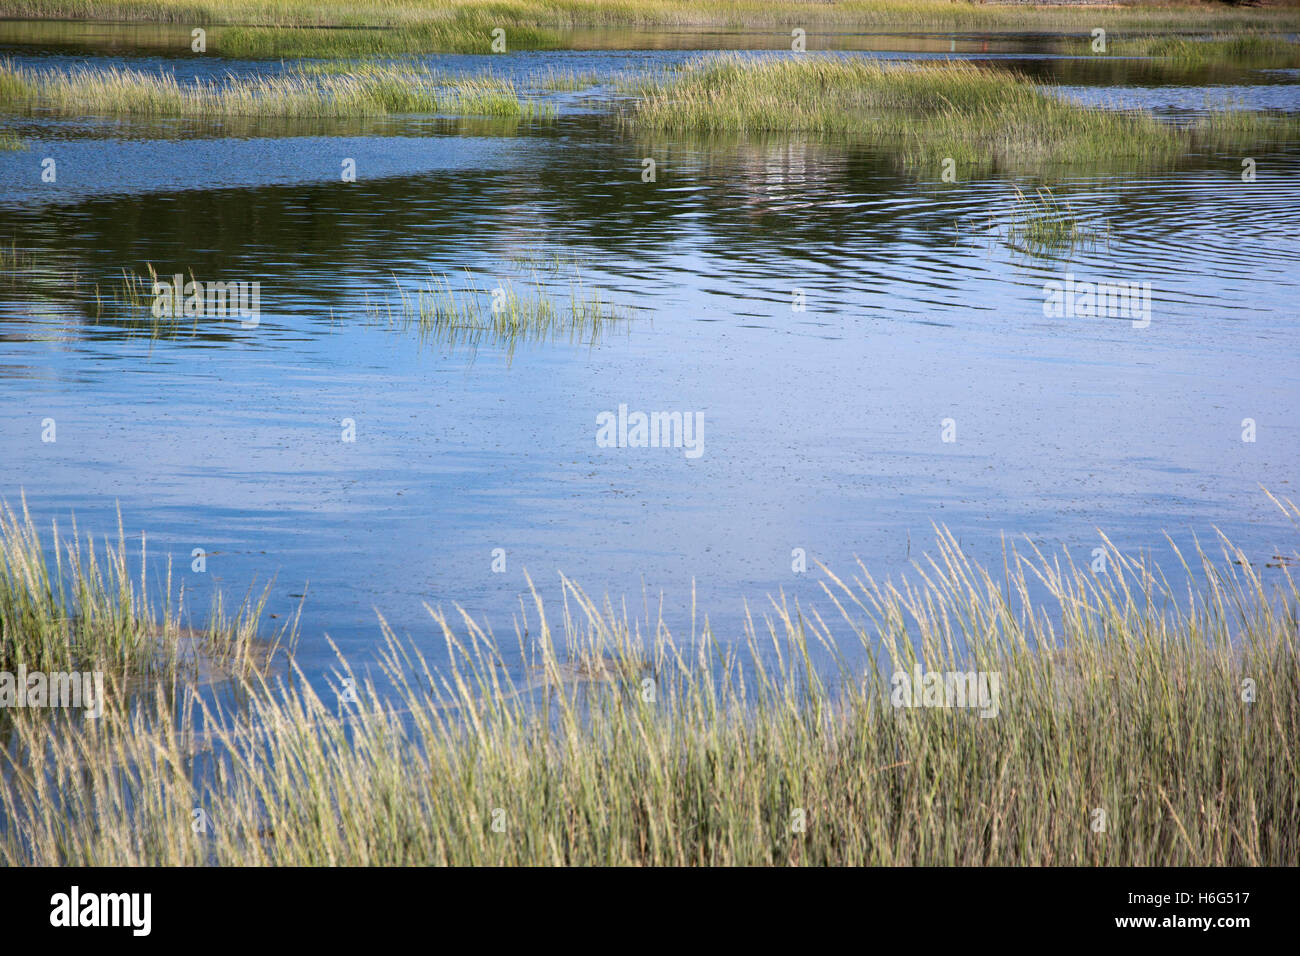 Cordgrass (Spartina alterniflora) in a salt water marsh creek at high tide. Stock Photo